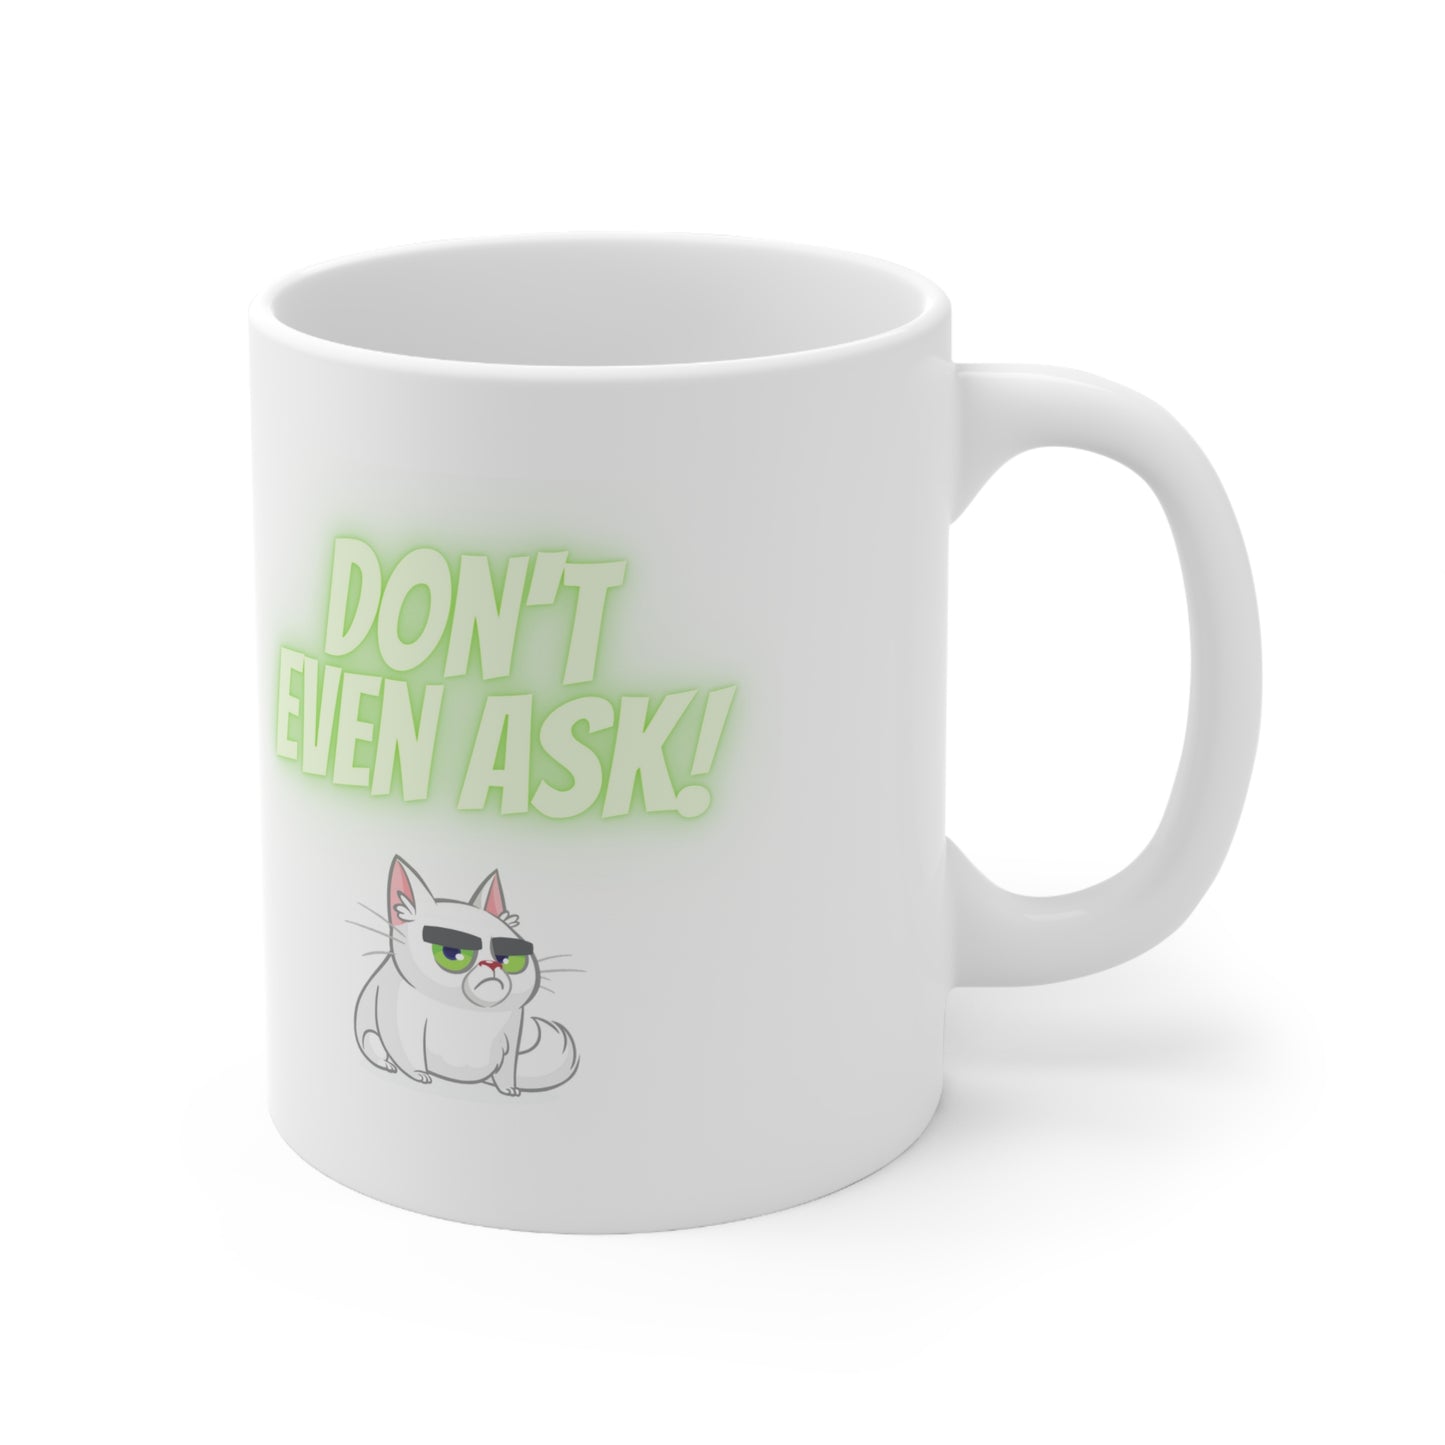 Don't Even Ask Cranky Cat Mug